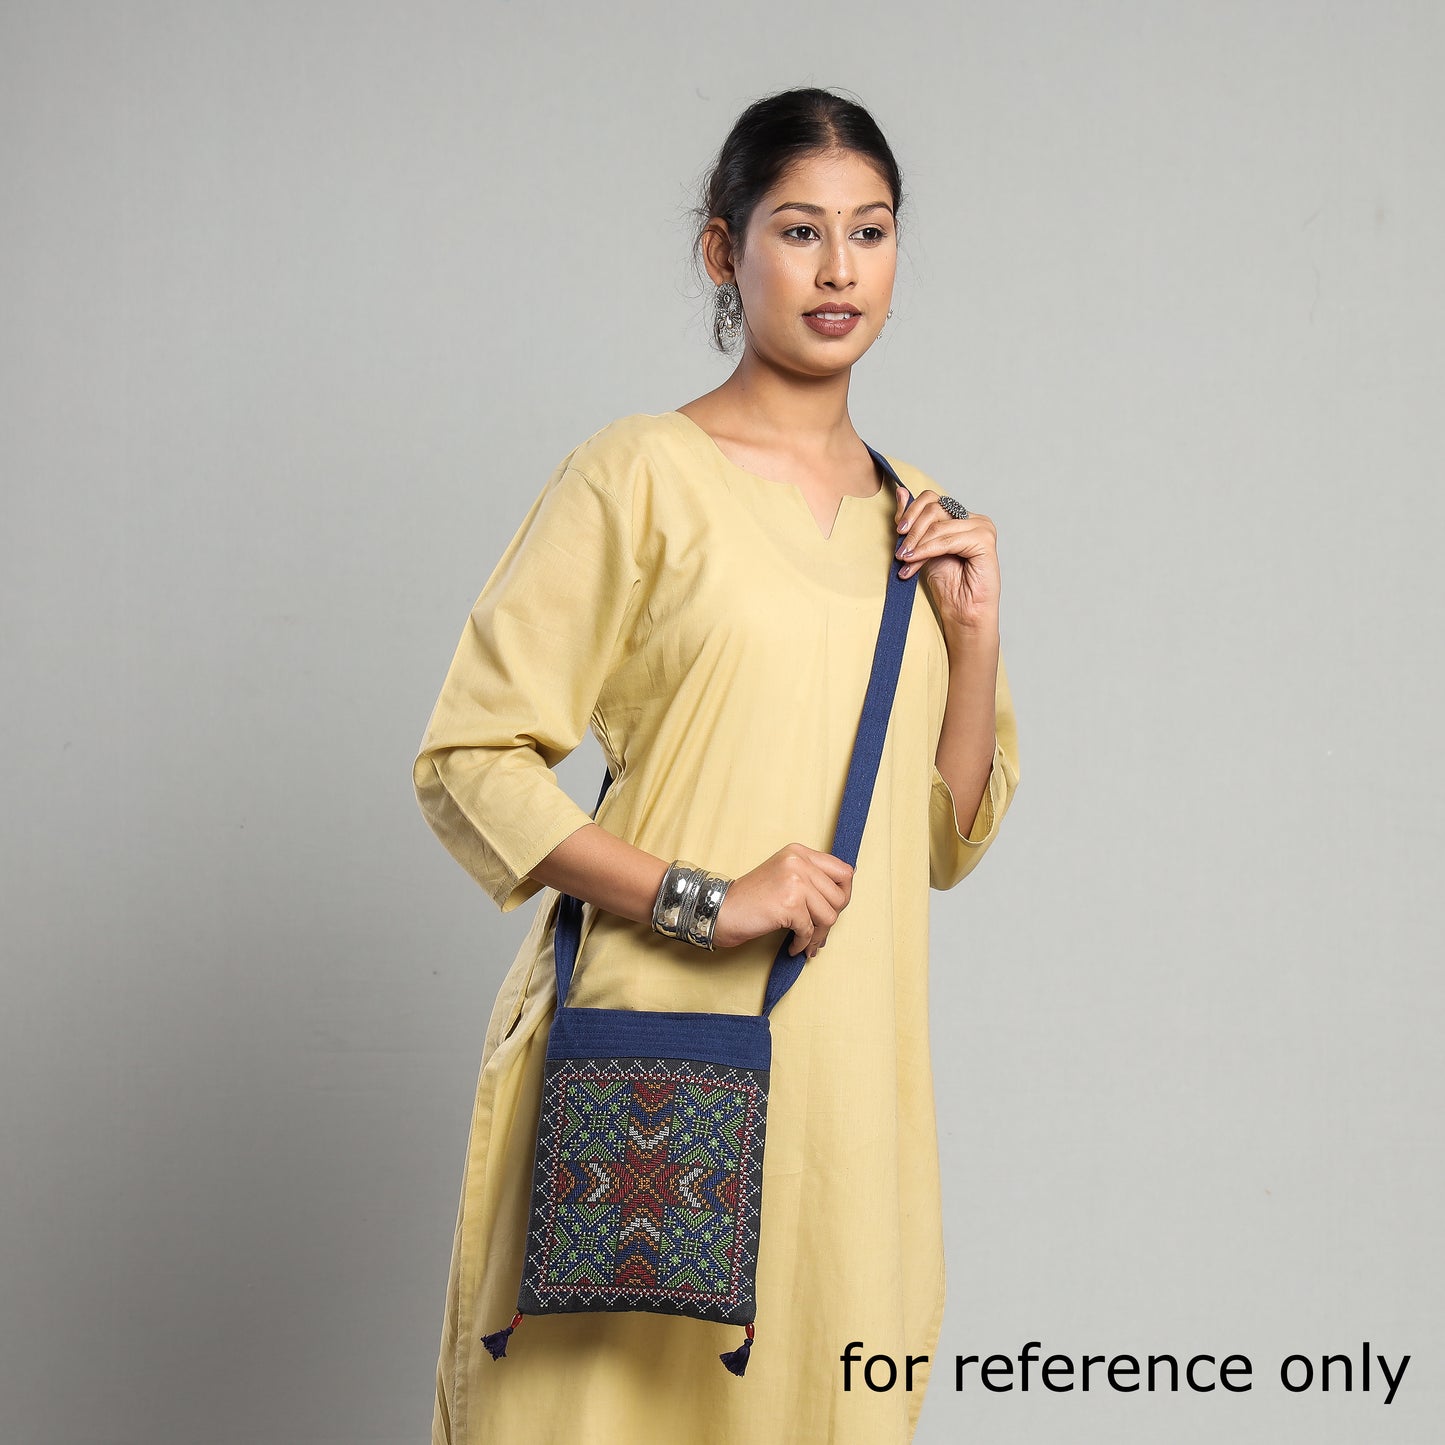 Black - Kutch Jat Hand Embroidery Mashru Silk Sling Bag